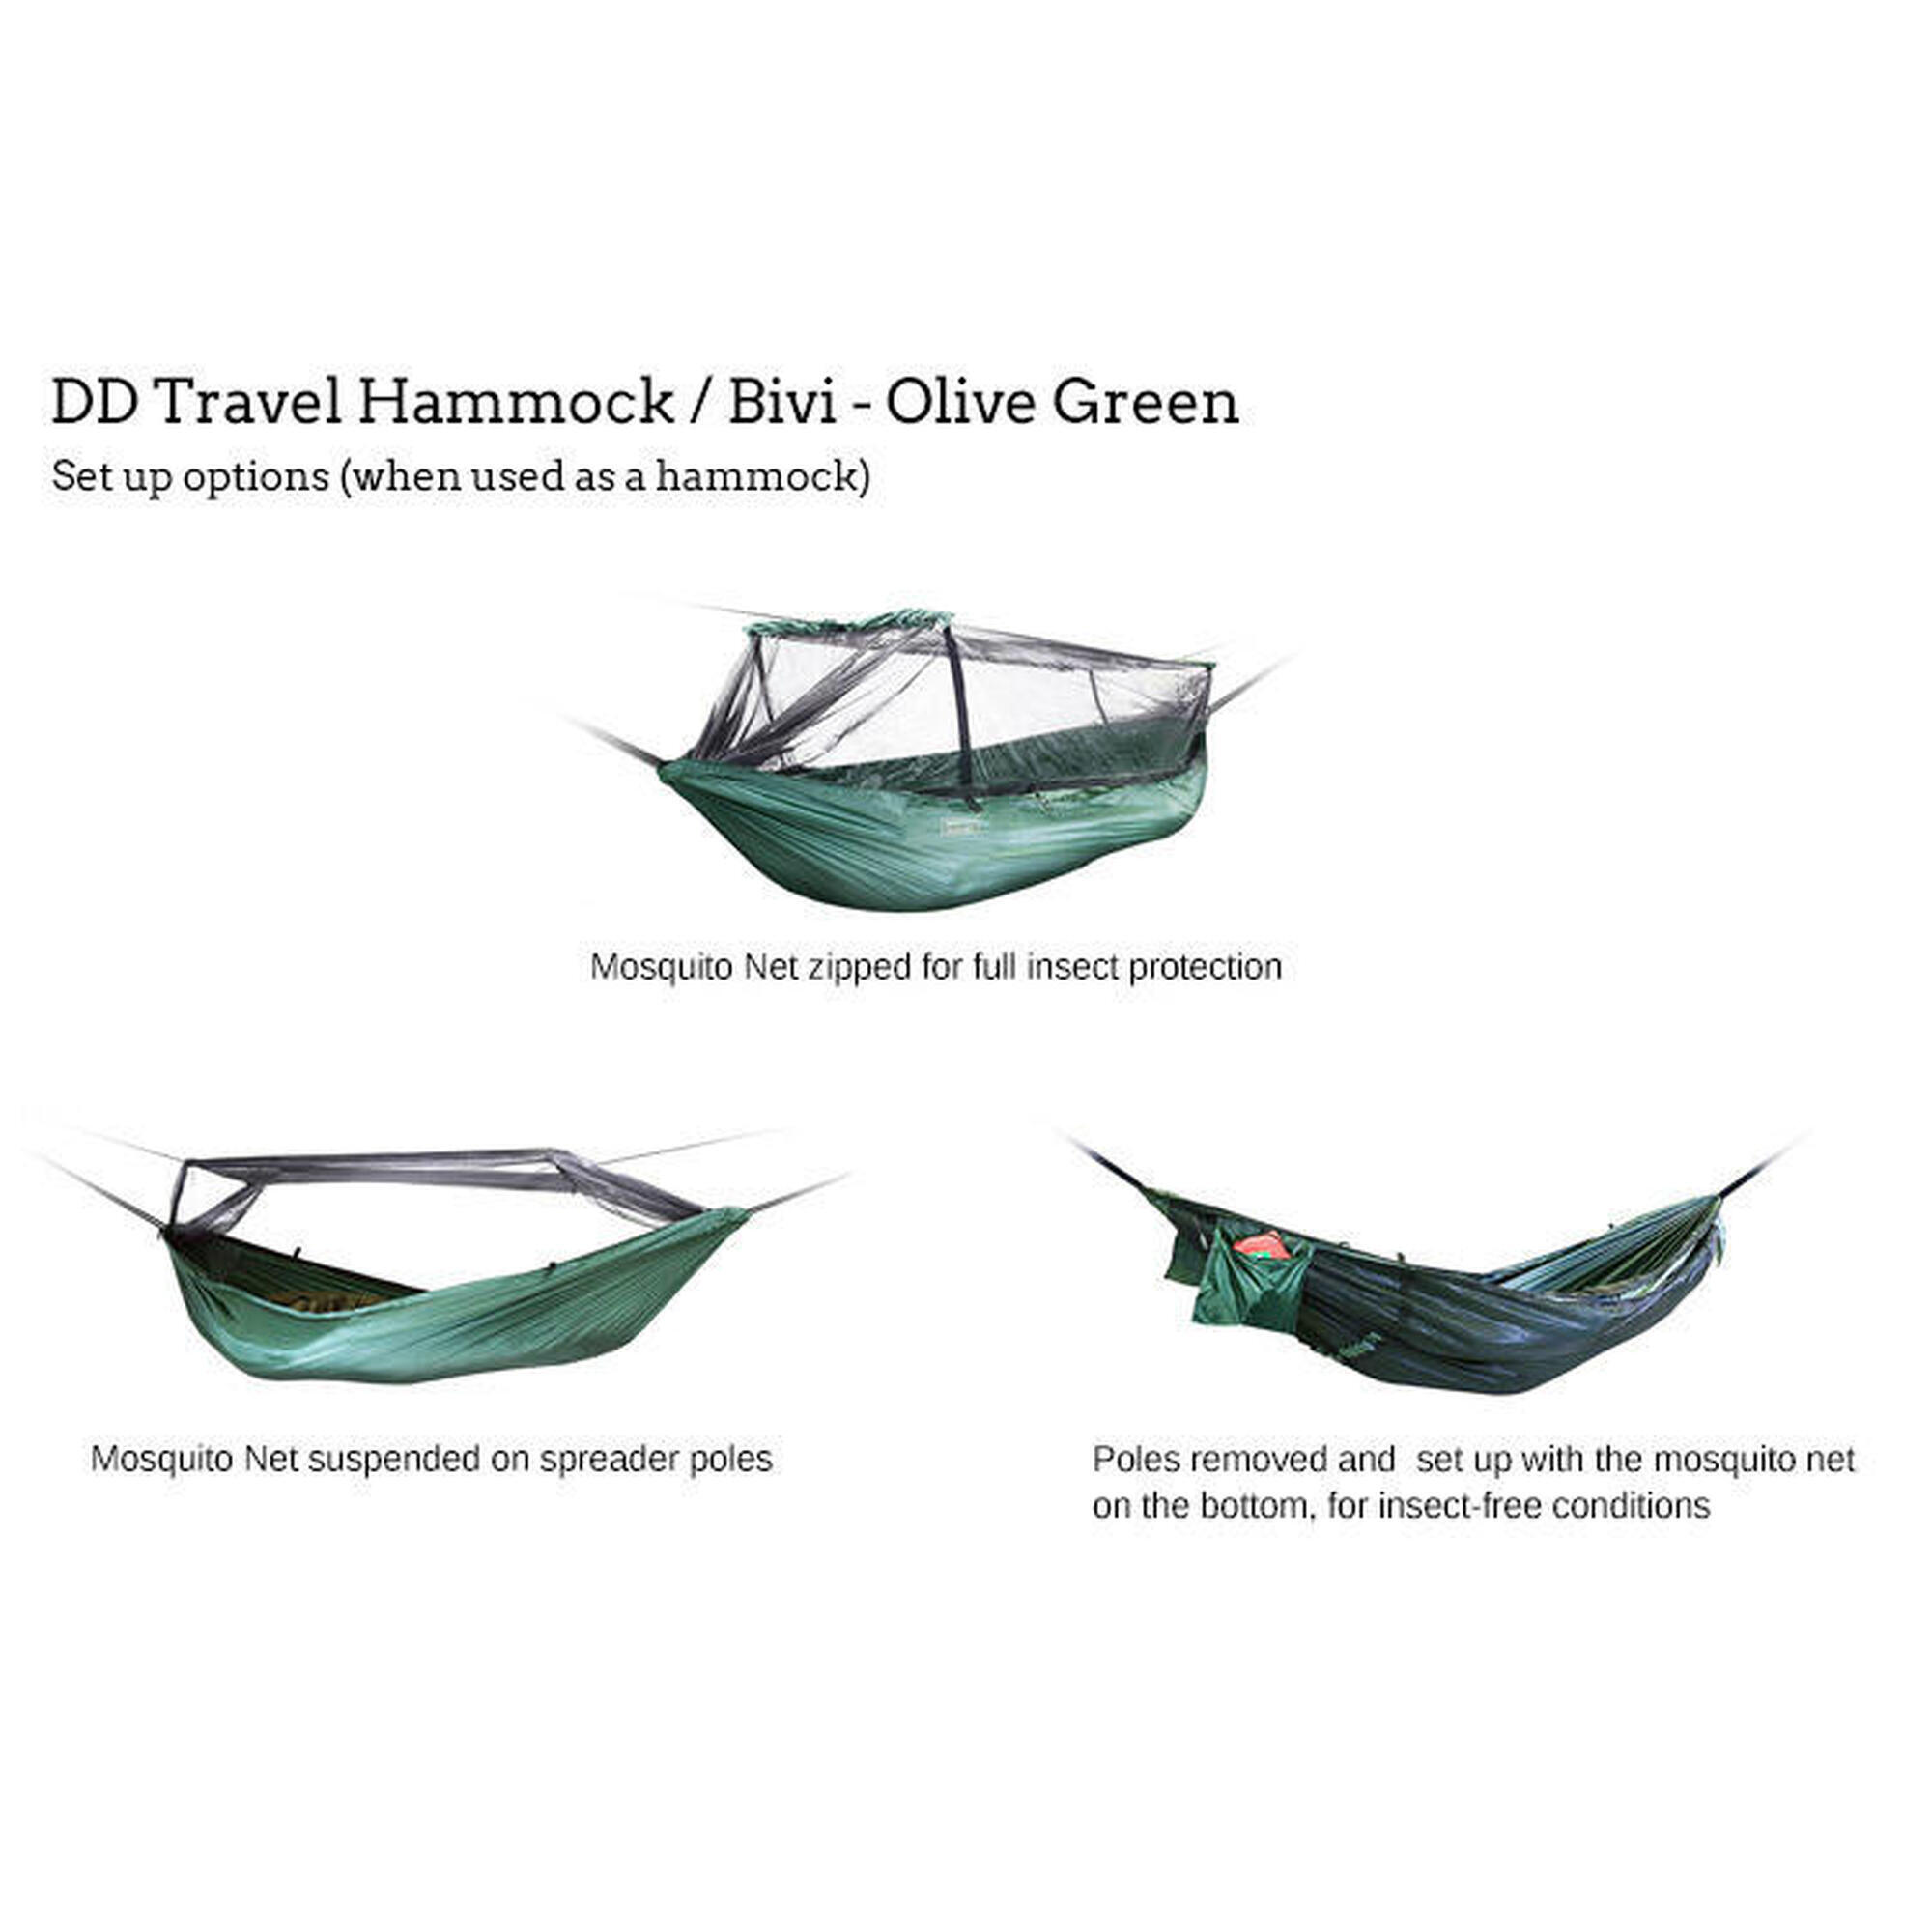 DD Hammocks Travel hangmat / Bivi – Olive Green